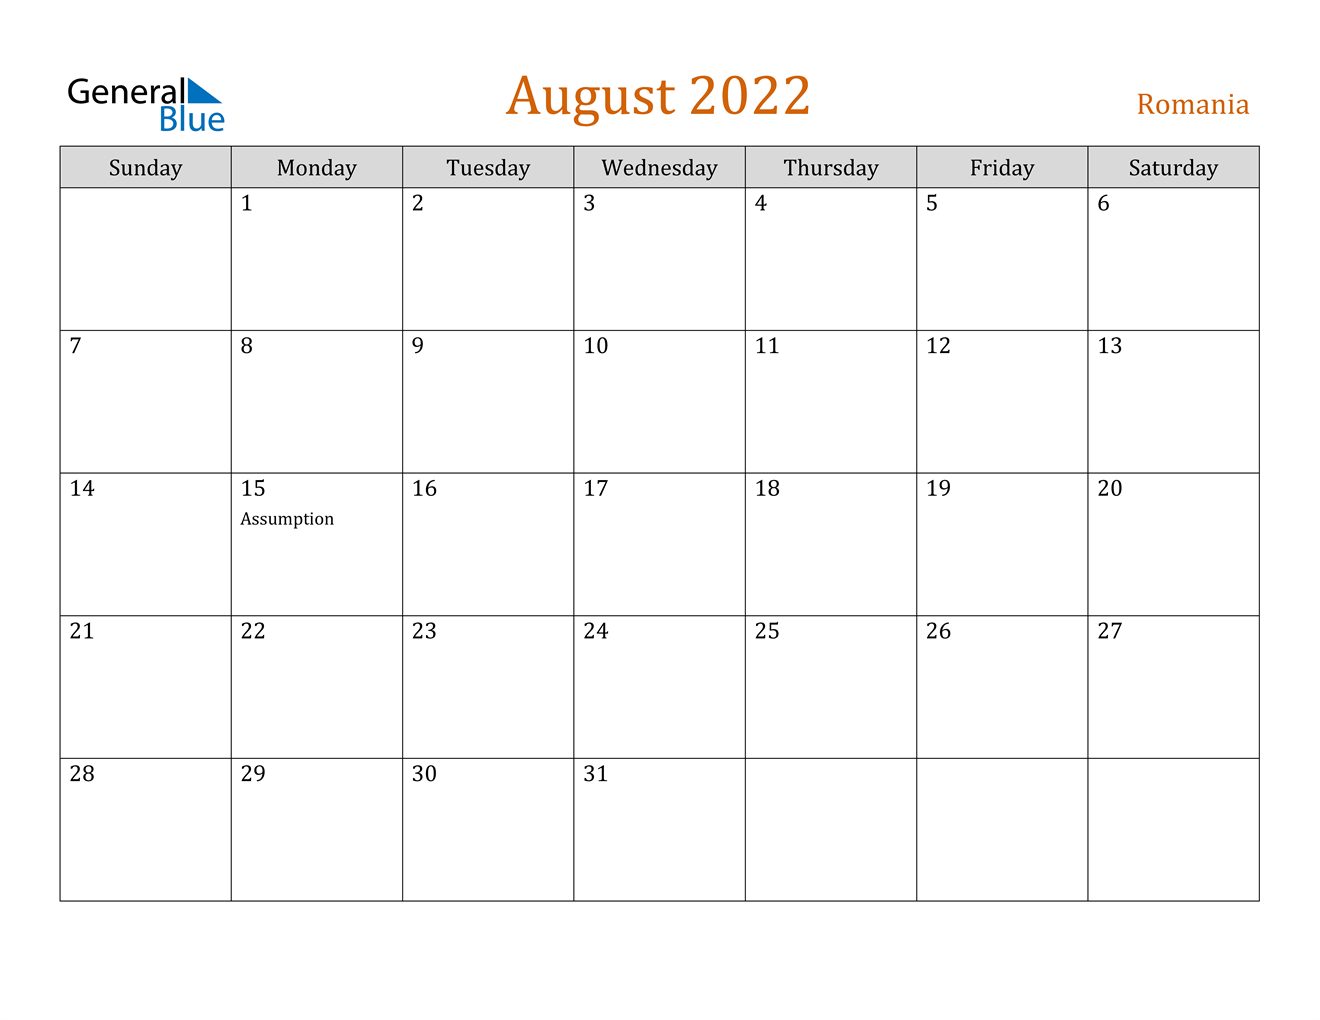 August 2022 Calendar - Romania